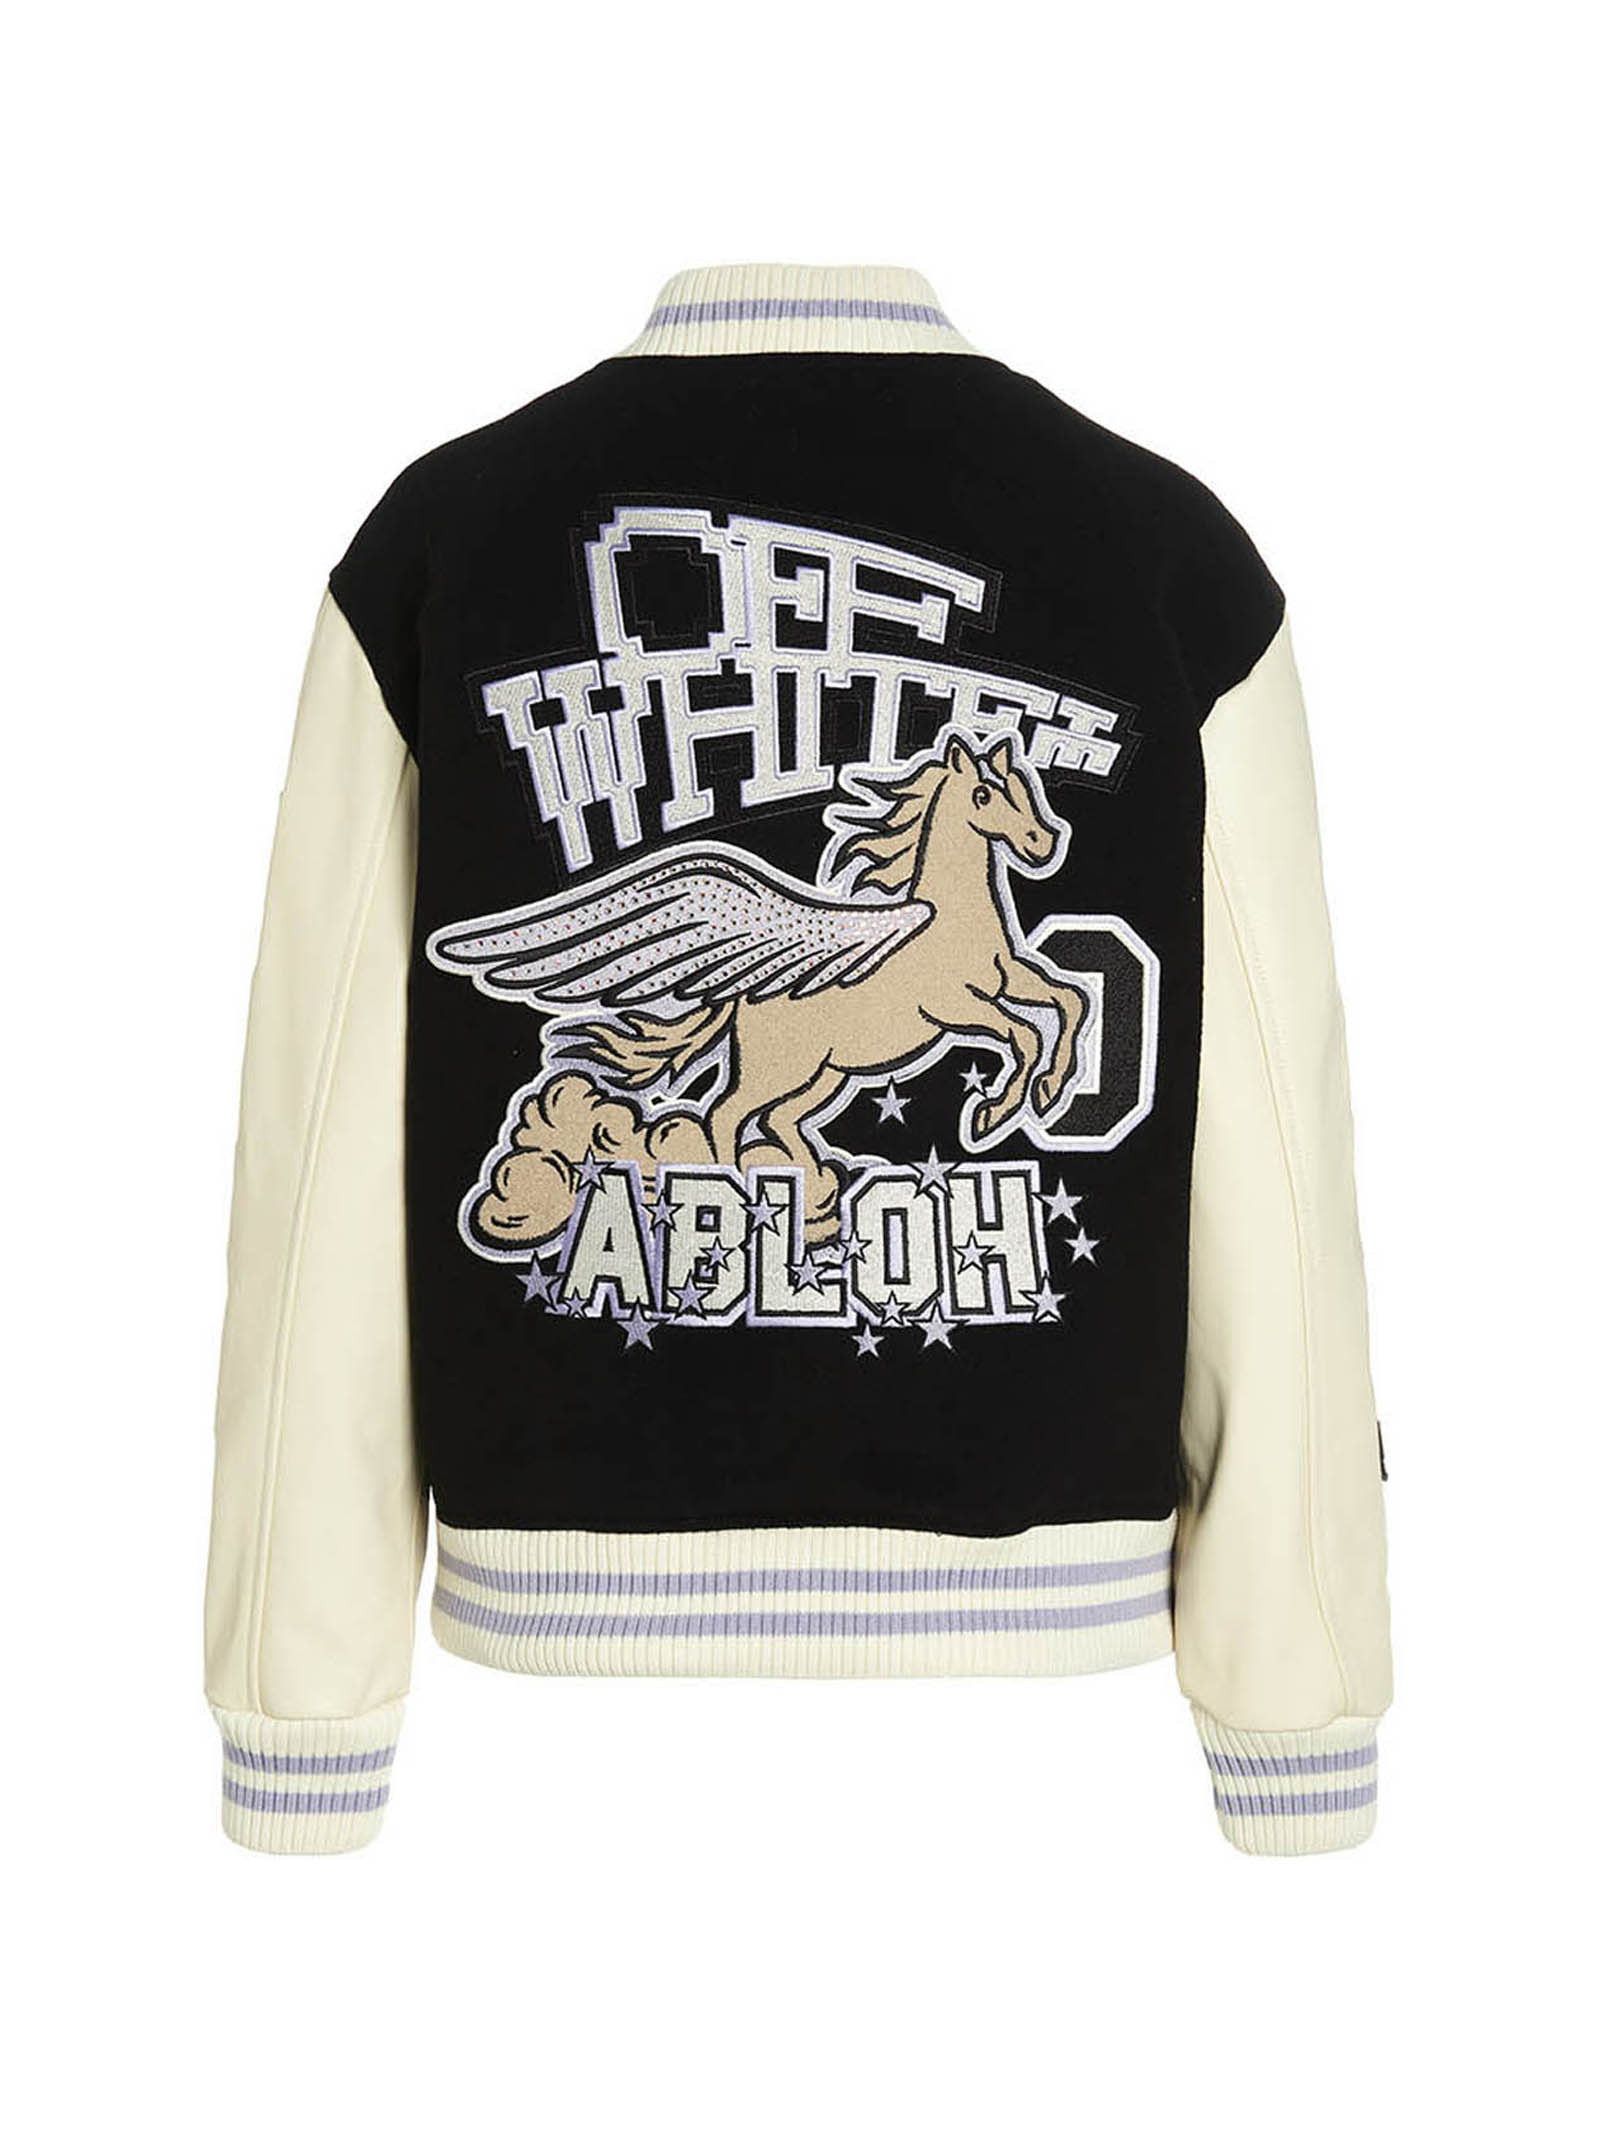 Off-White c/o Virgil Abloh OW Patch Varsity Jacket